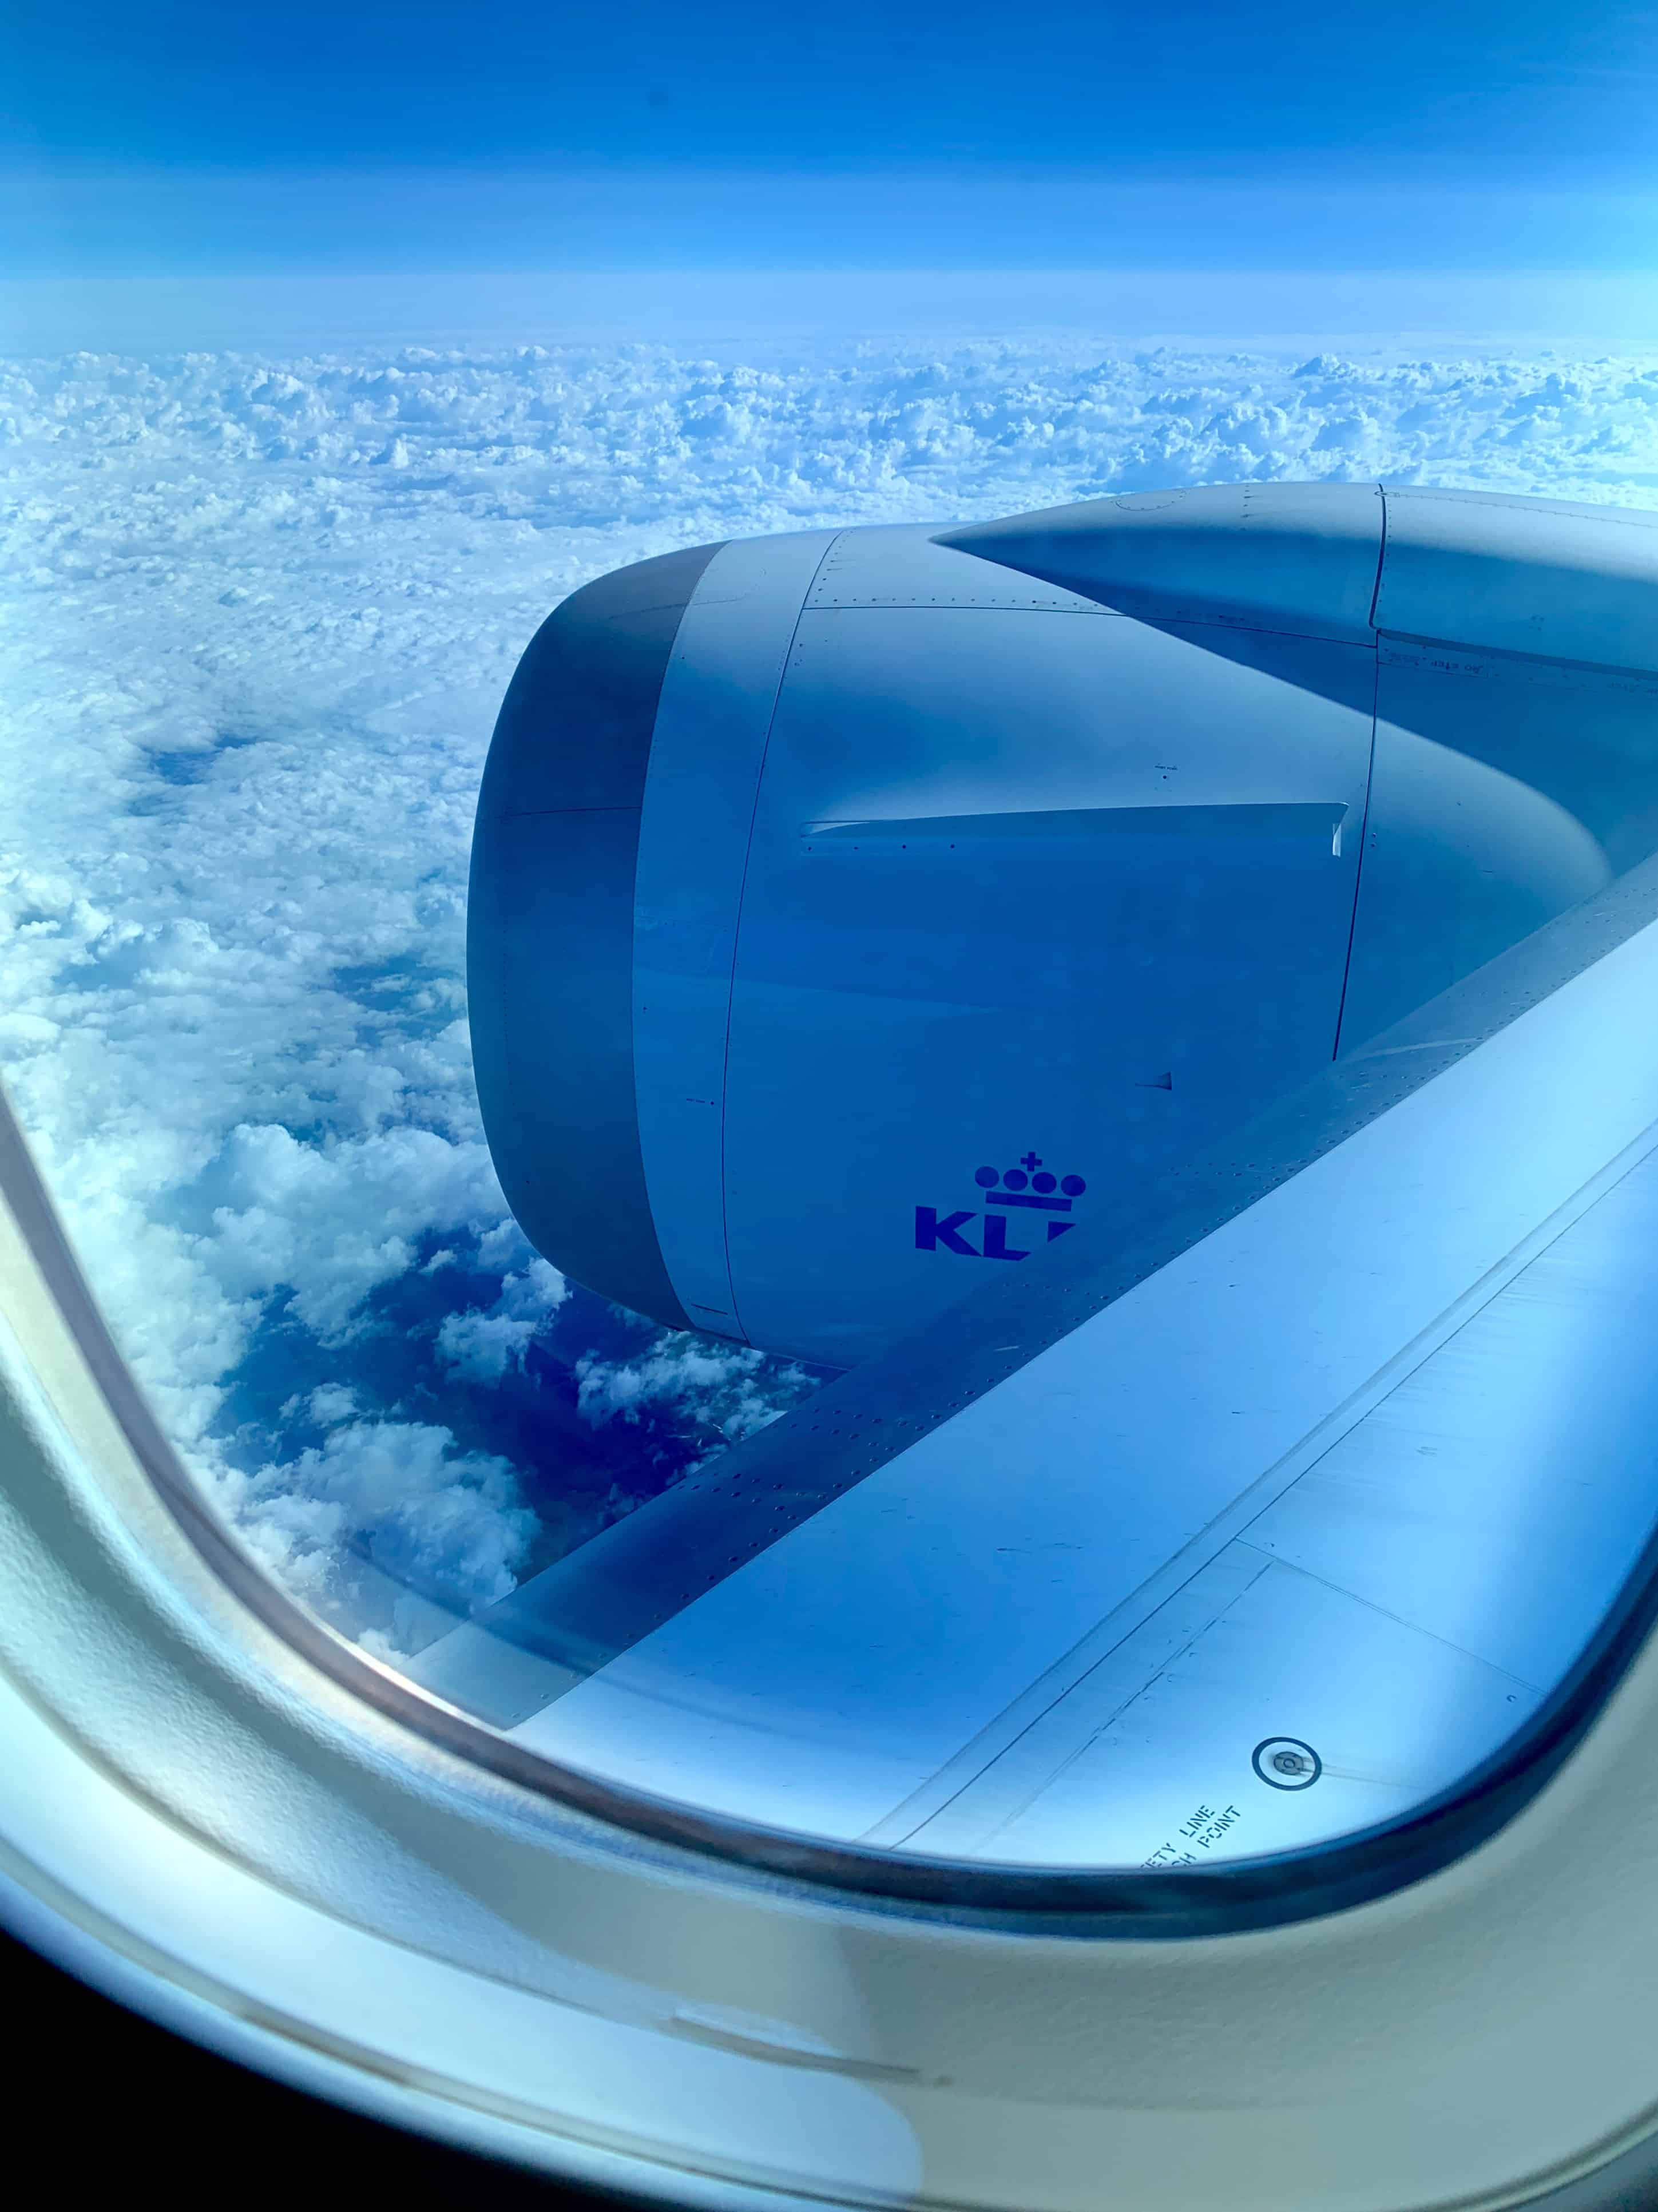 KLM flight, fly responsibly